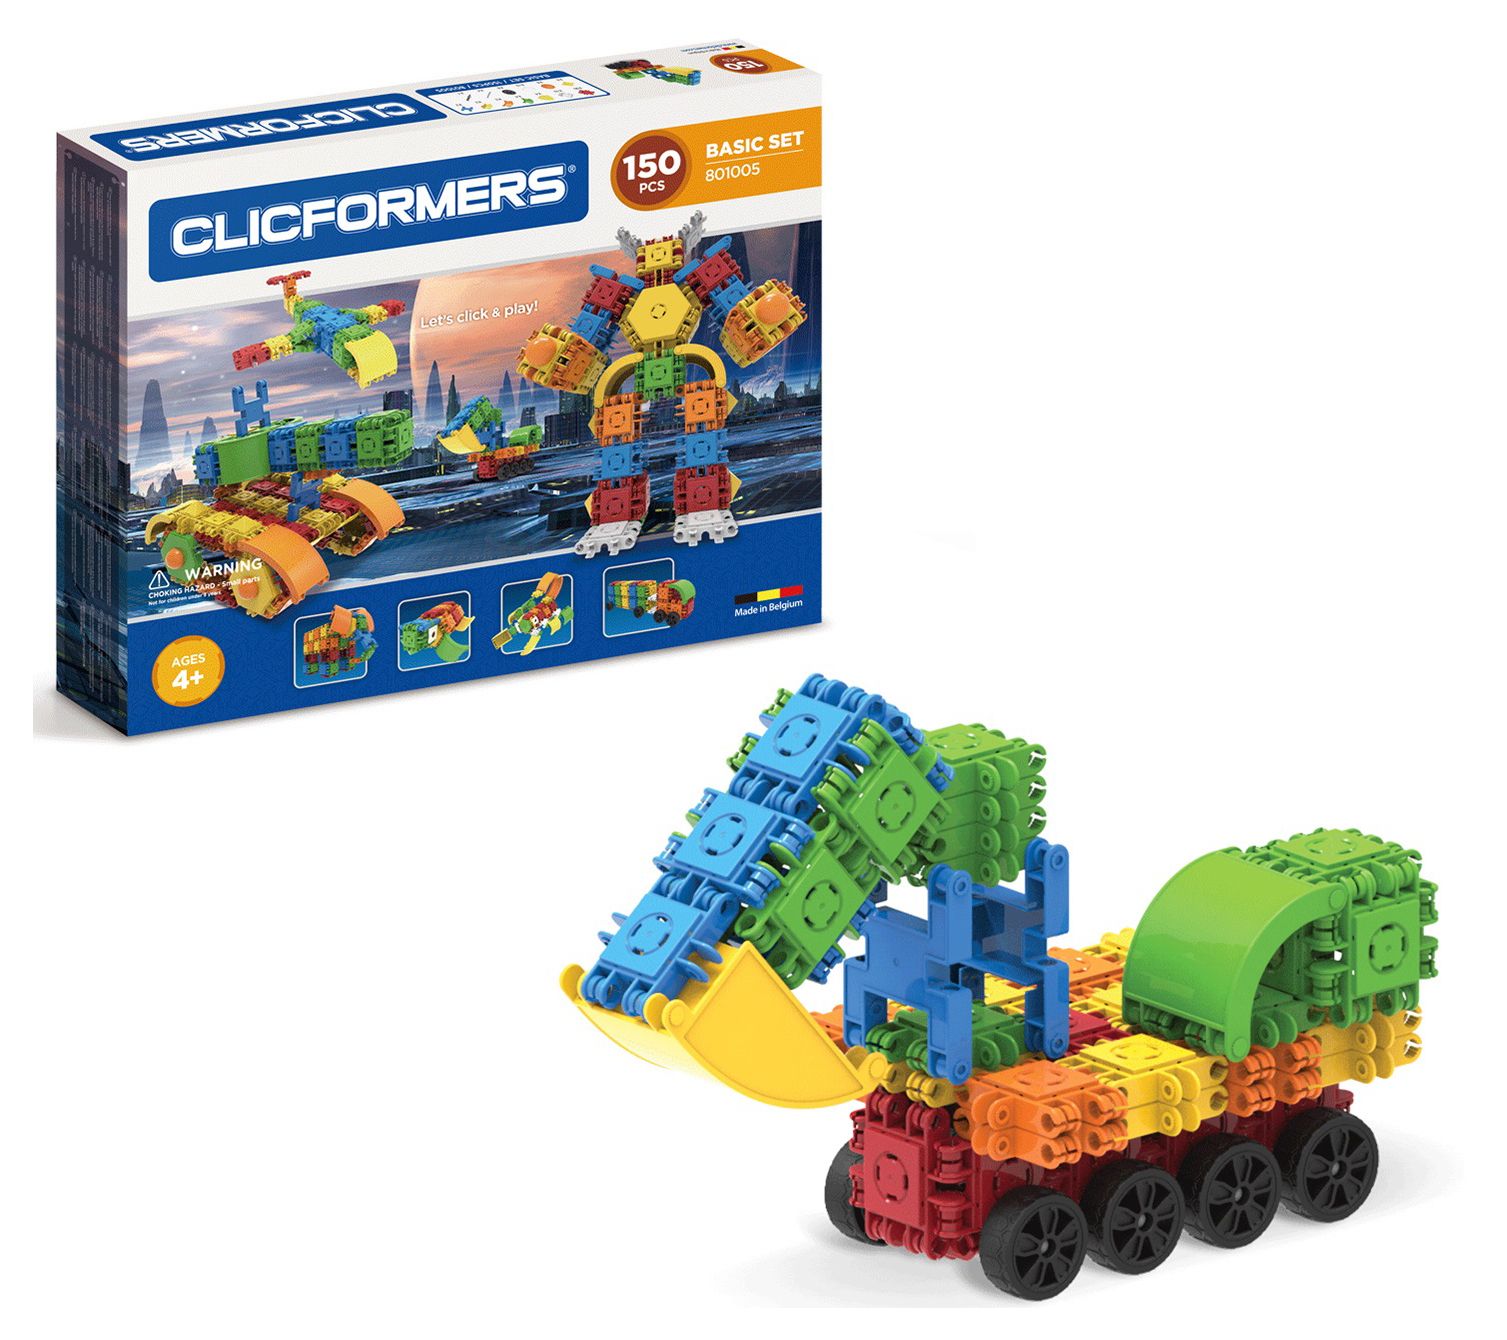 Clicformers Basic Set - 150 Pieces - QVC.com